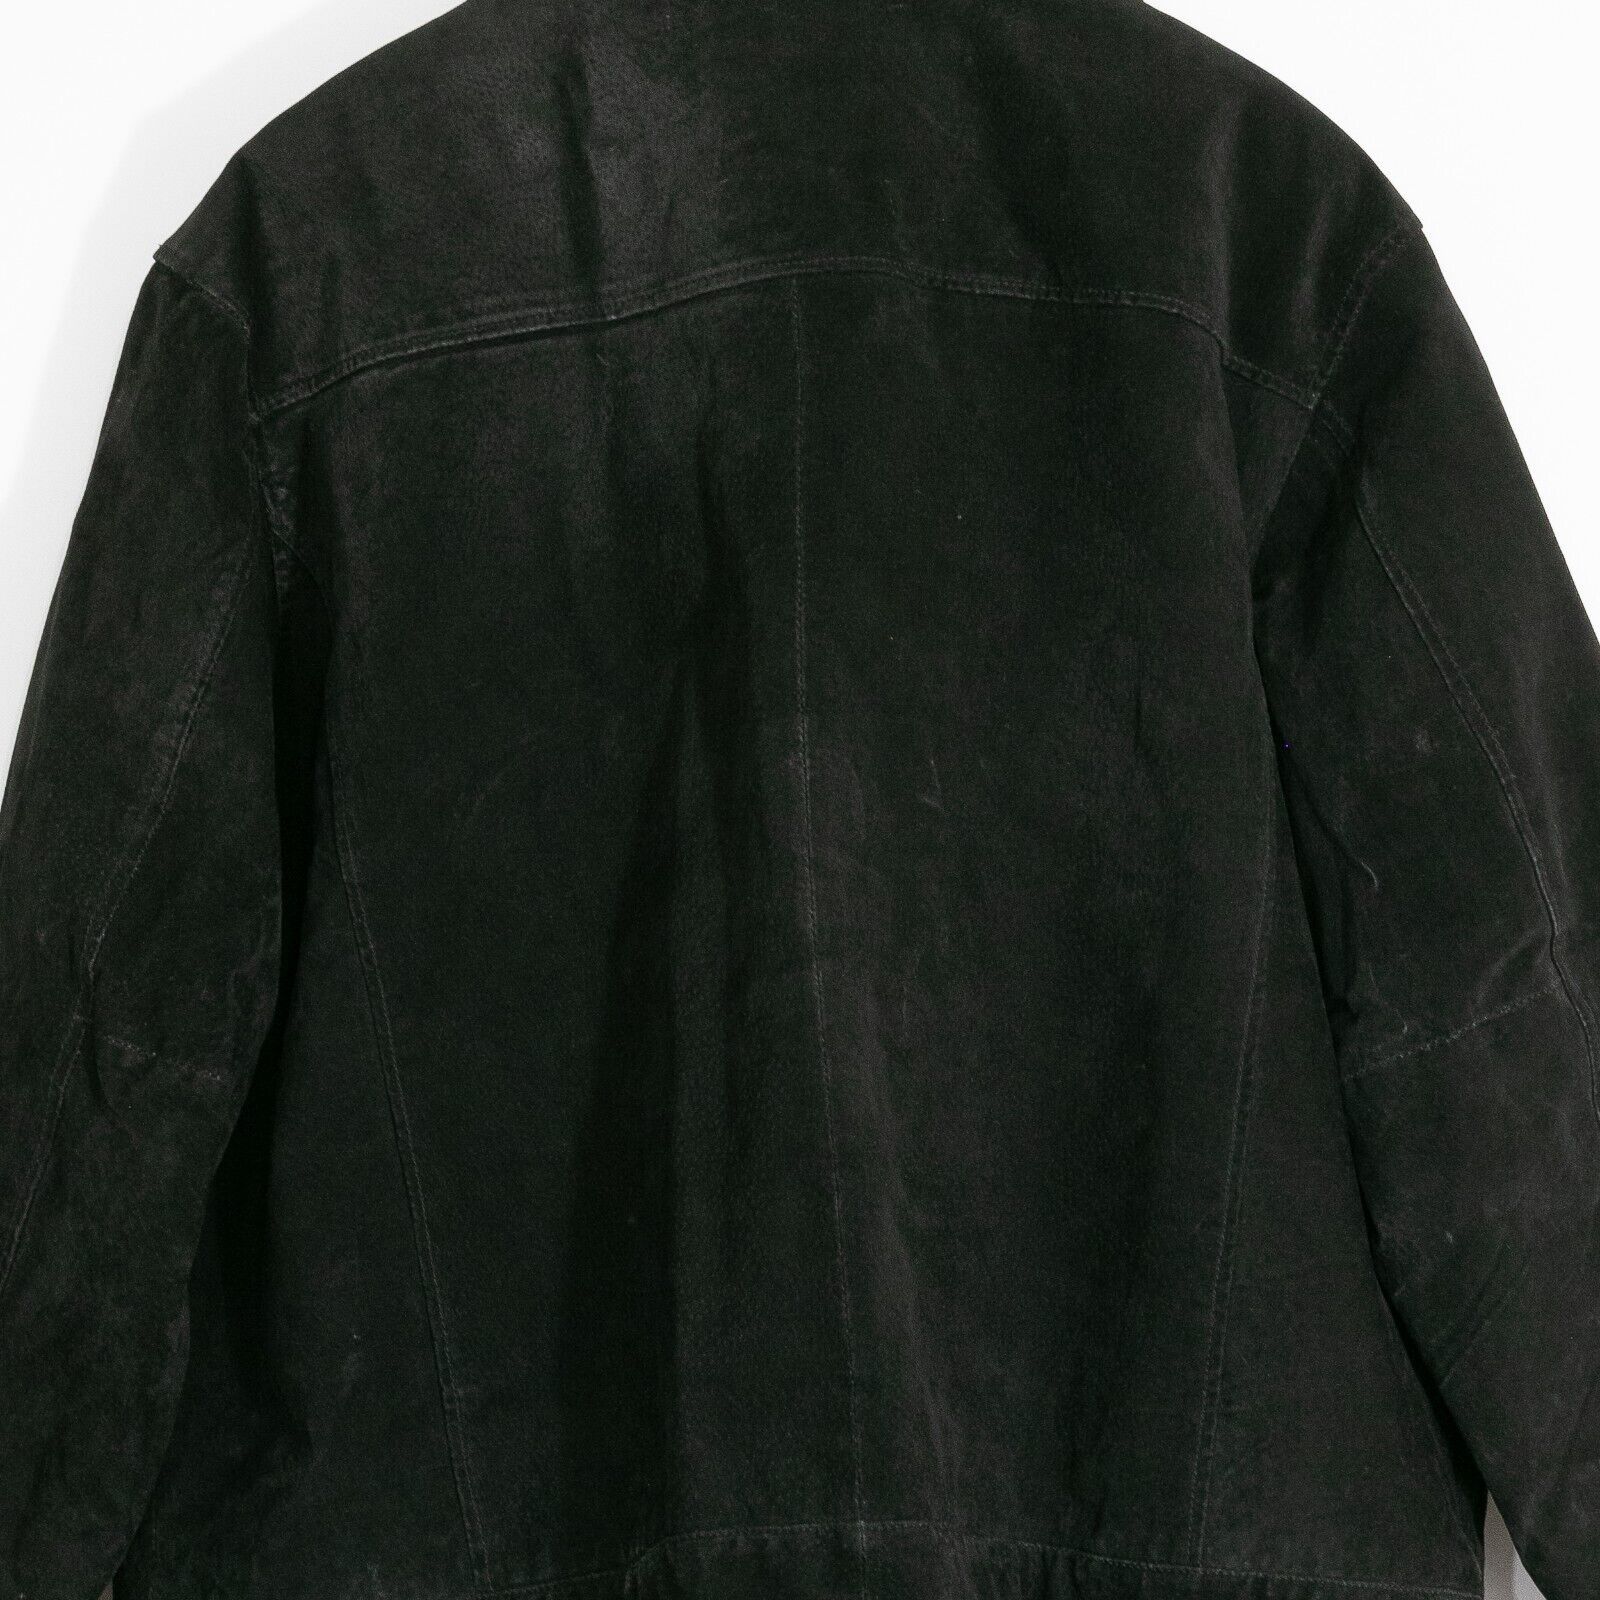 Vintage Vintage Black Suede Zip Up Jacket XL - Patina Distressed Size US XL / EU 56 / 4 - 7 Preview